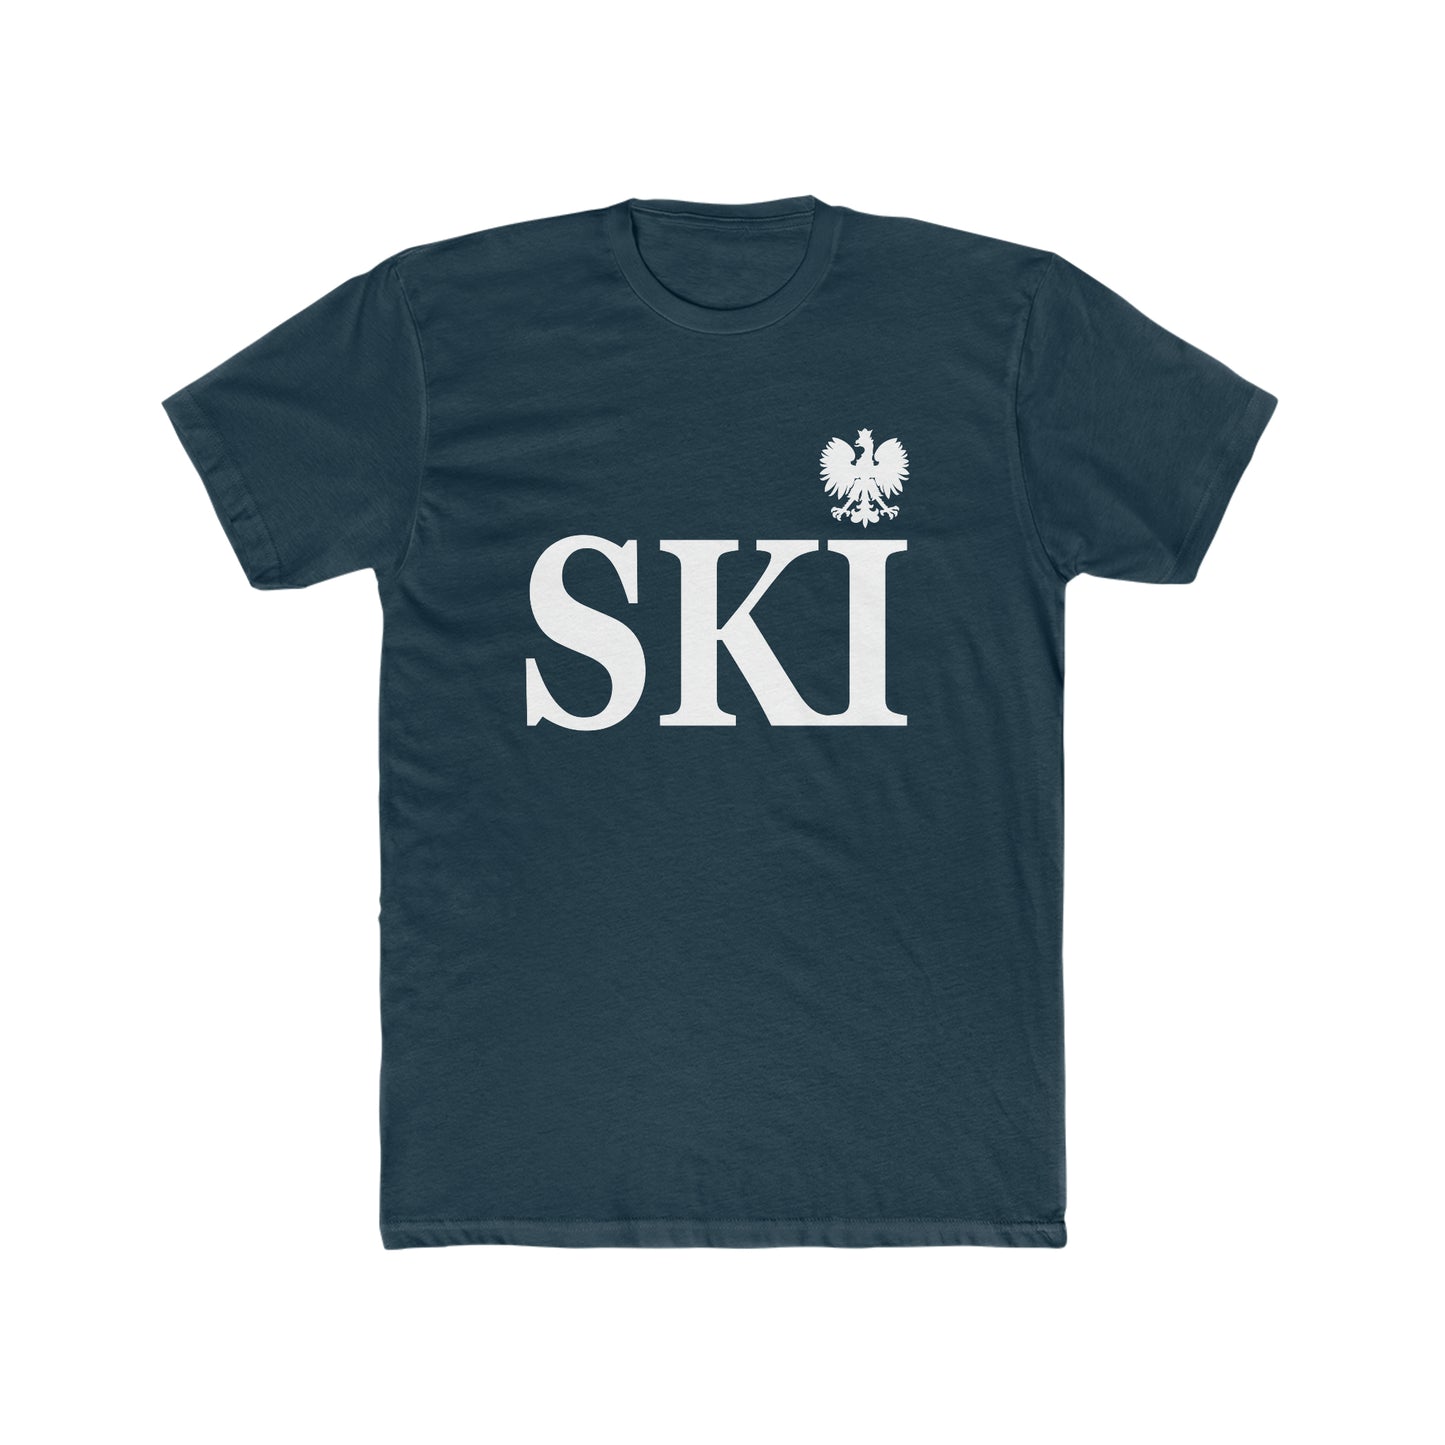 Polish T-Shirt Ski Classic Buffalo New York Chicago or Cleveland Unisex Cotton Crew Tee